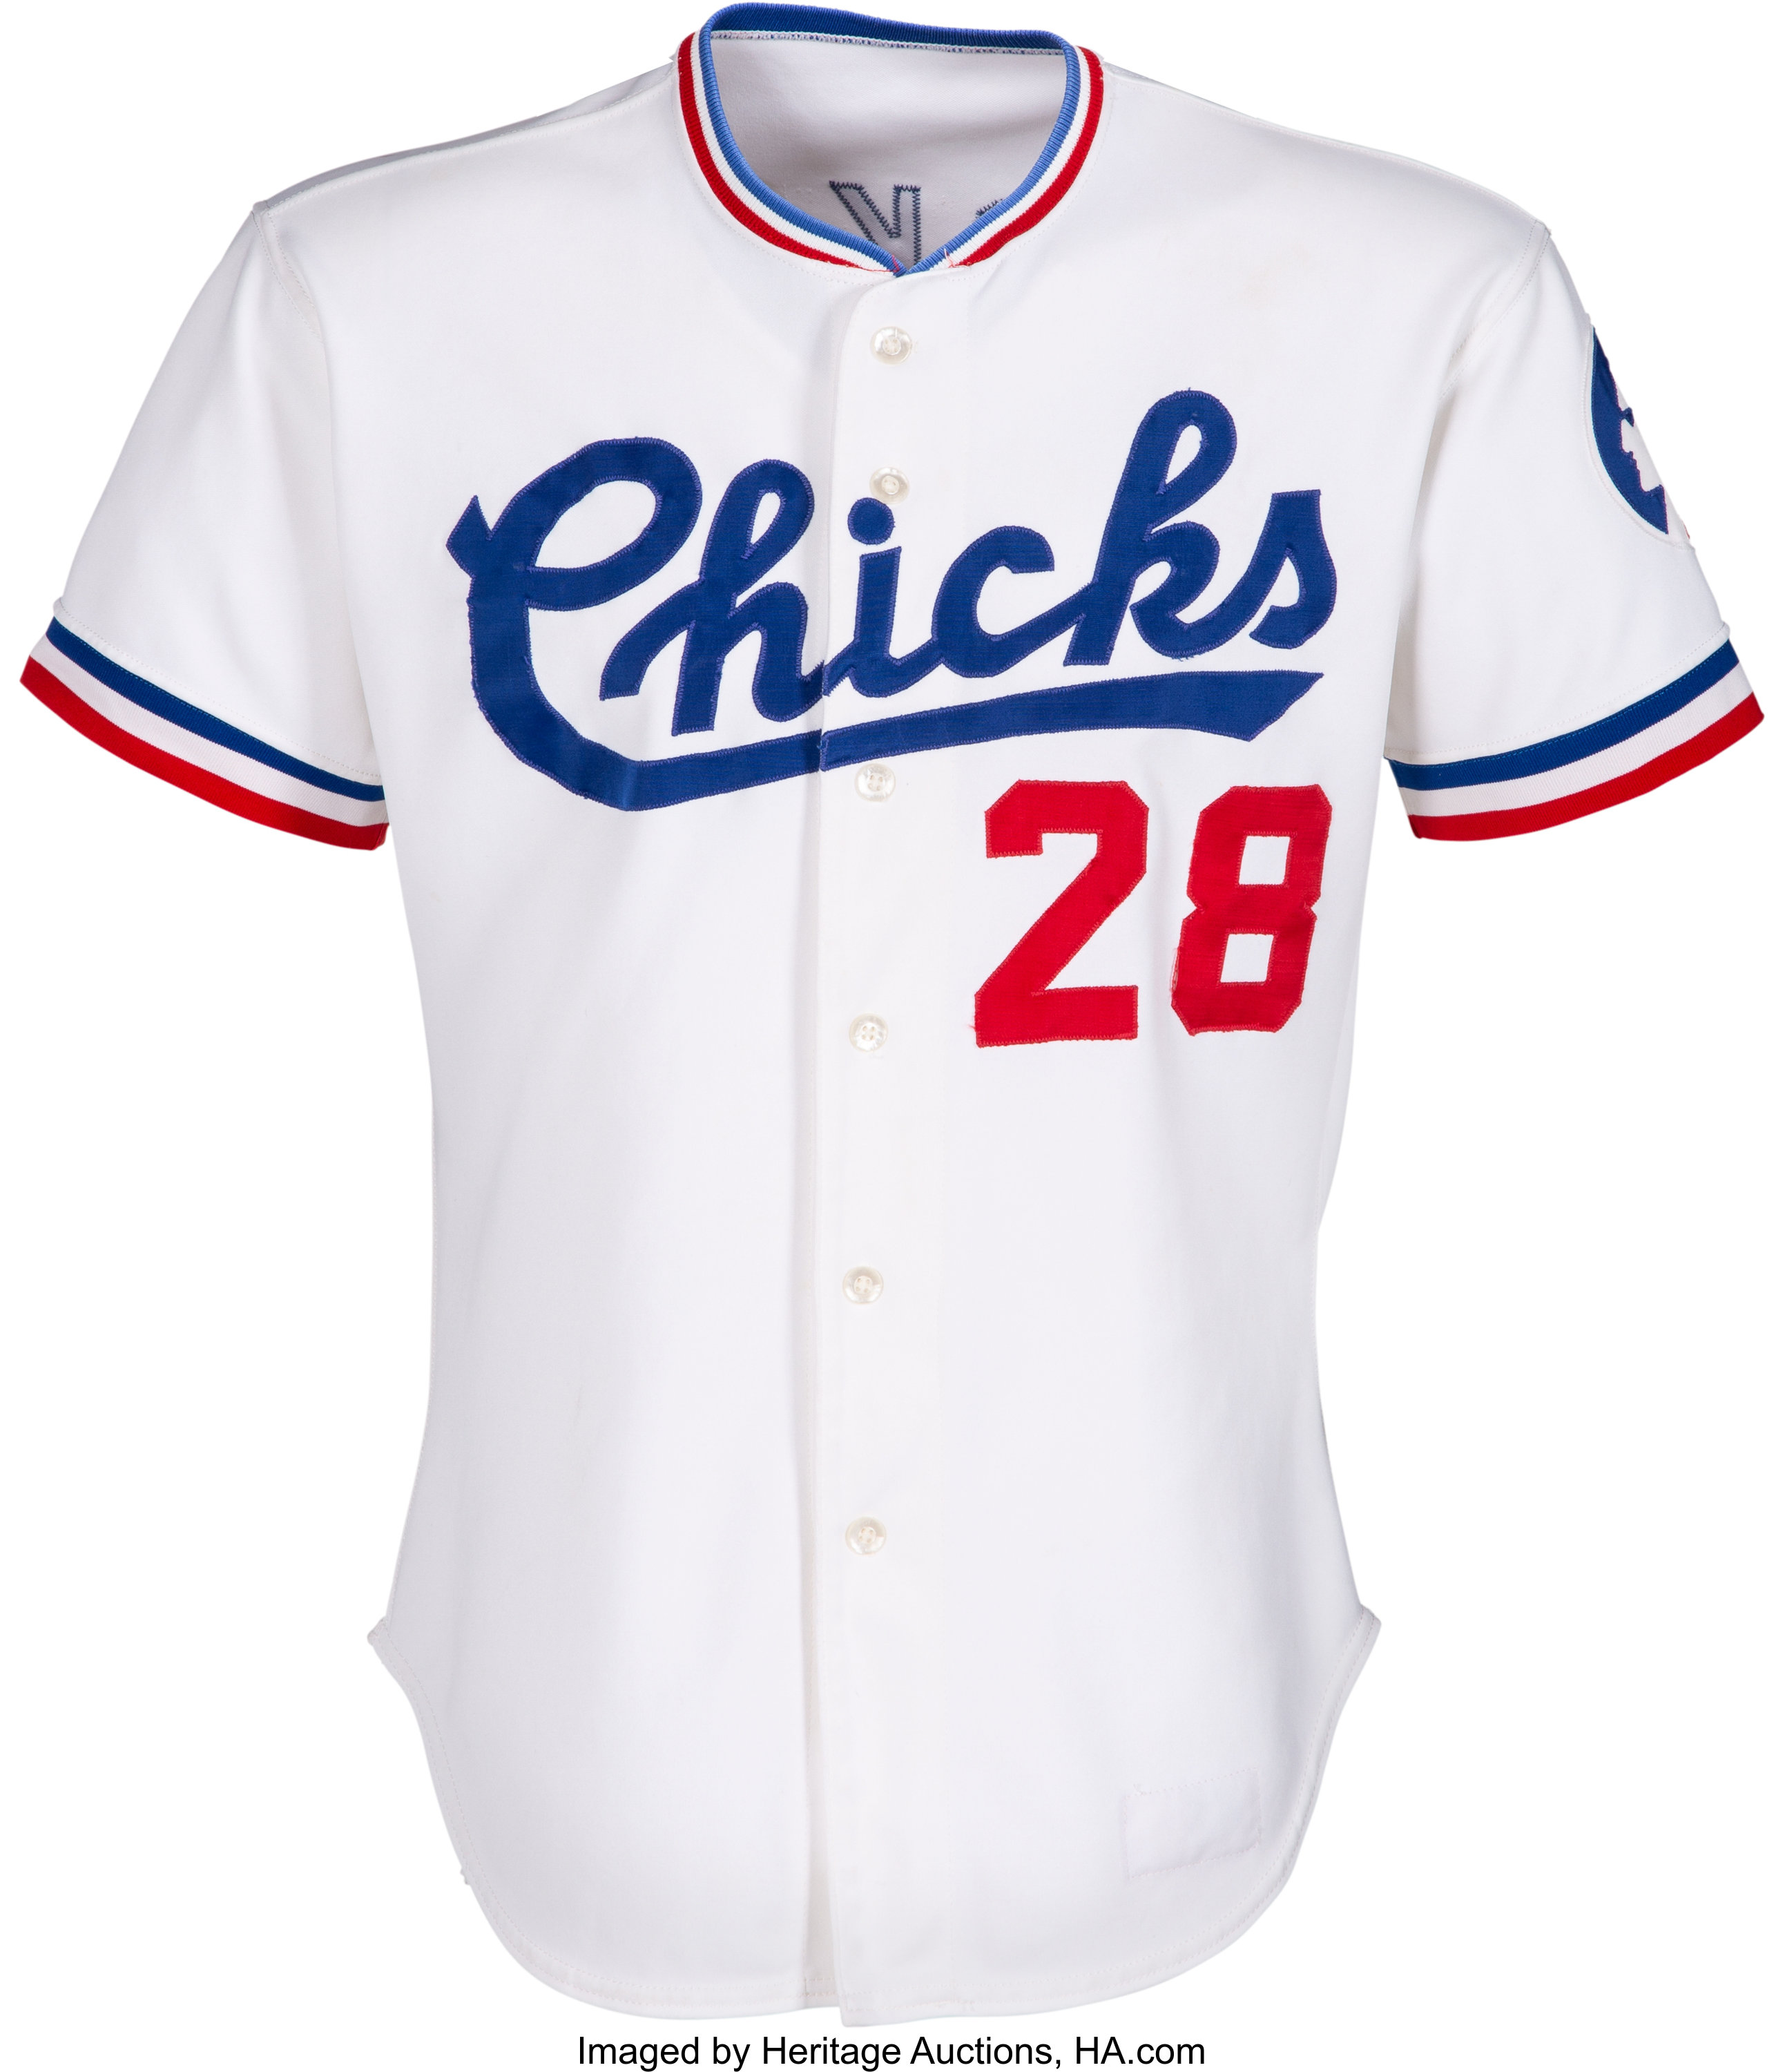 Bo Jackson #28 Chicks White Baseball Jersey Memphis Uniform